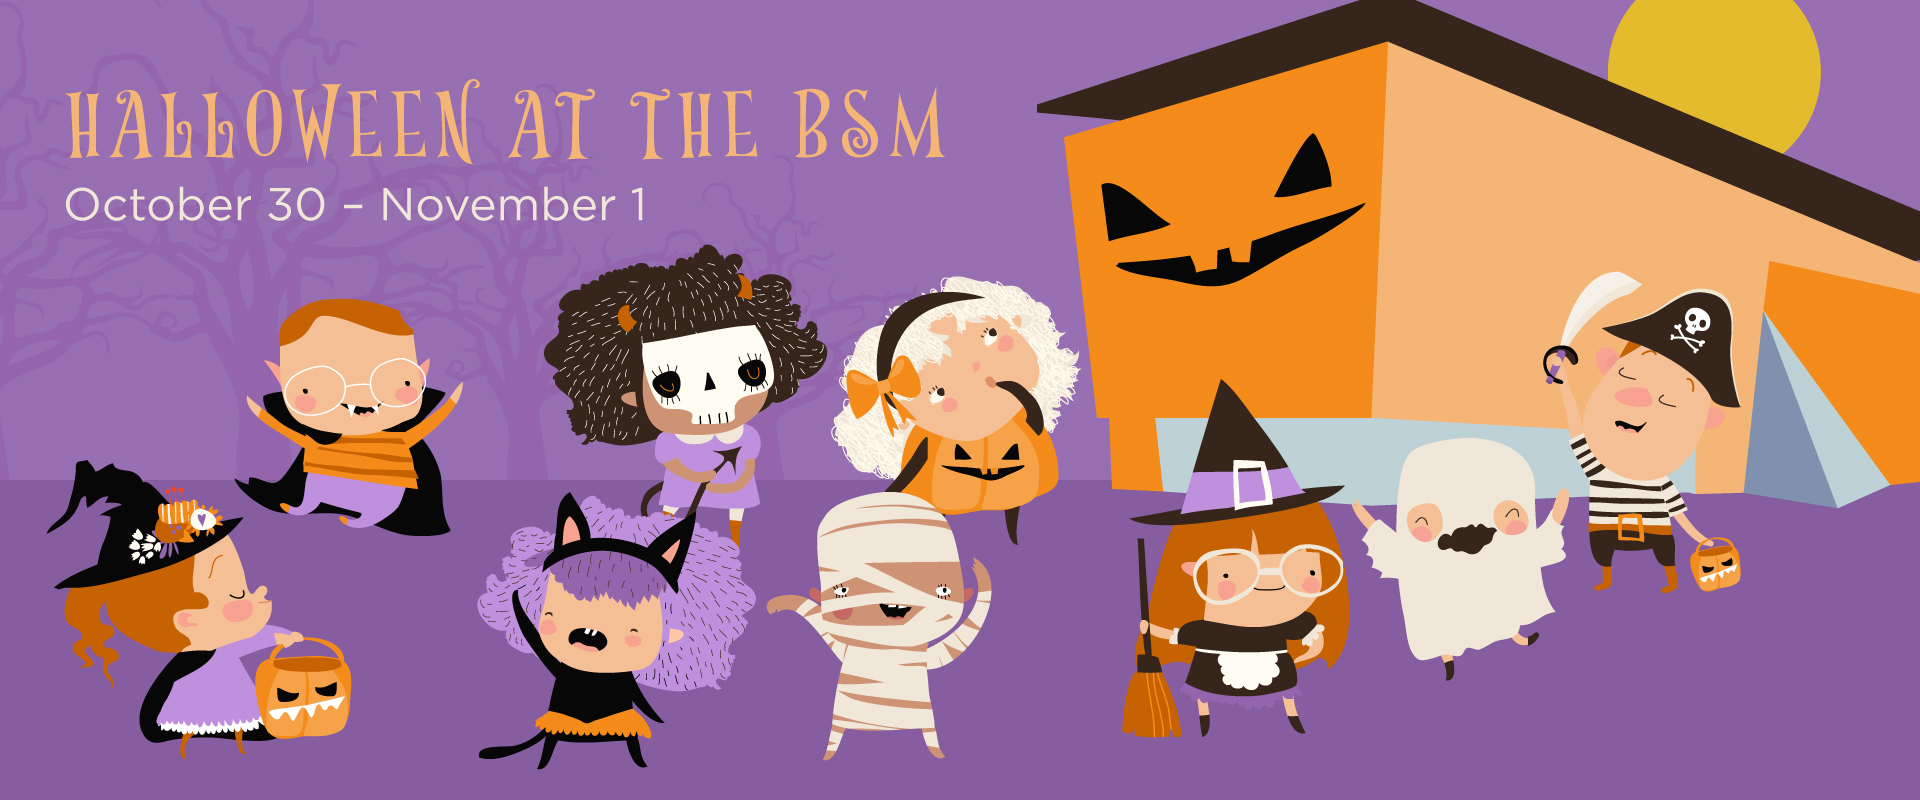 Halloween at the BSM